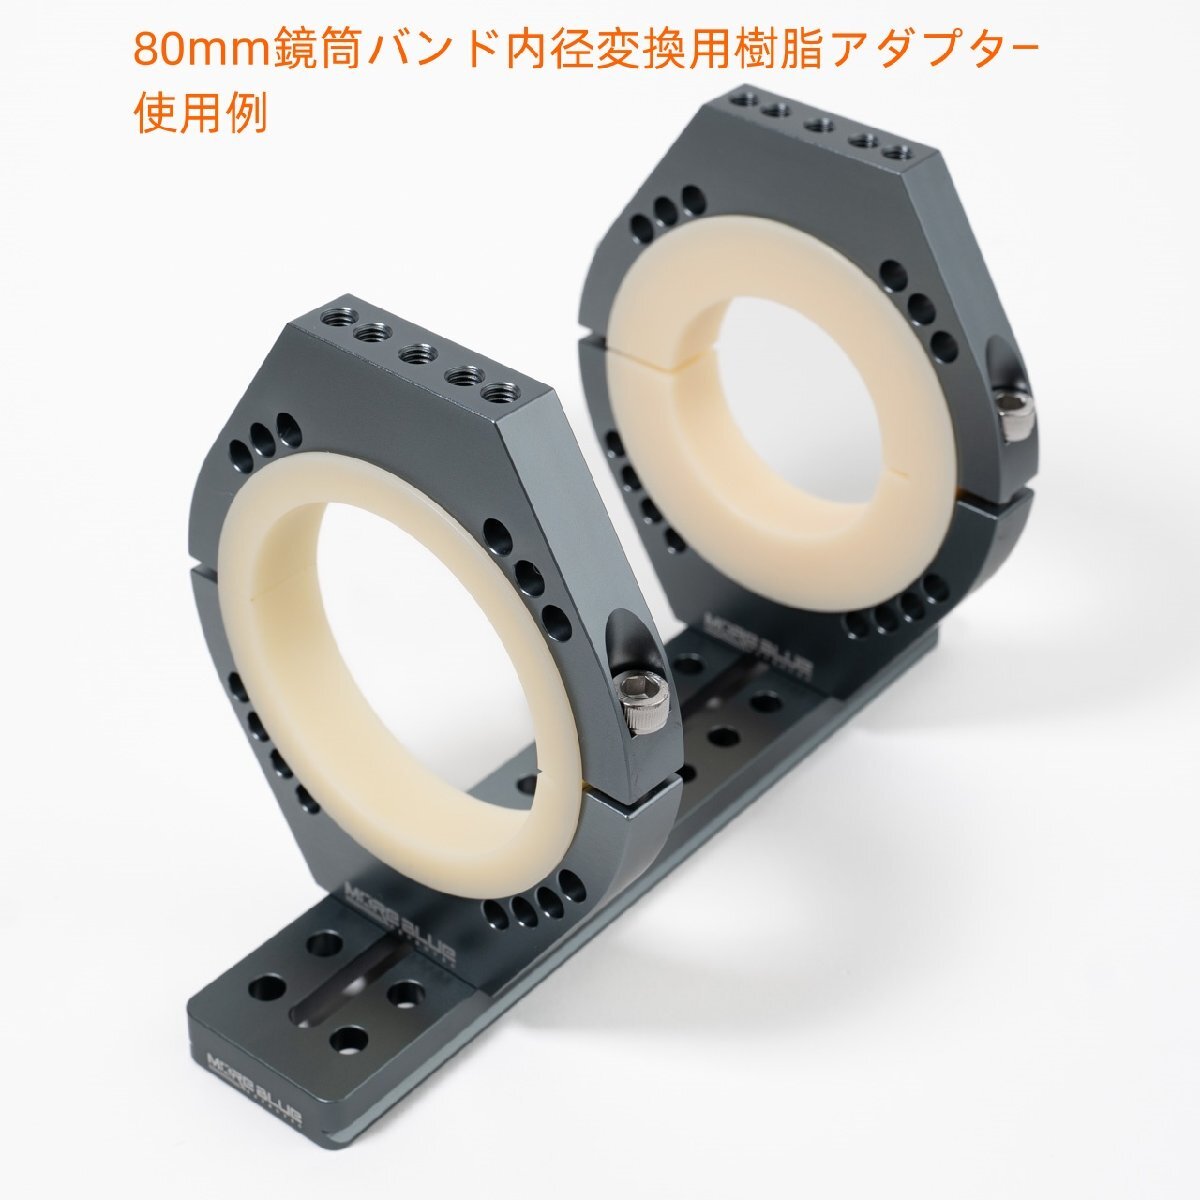 TB004-S super light weight . design inside diameter 80mm mirror tube band single sale click post uniform carriage 198 jpy 